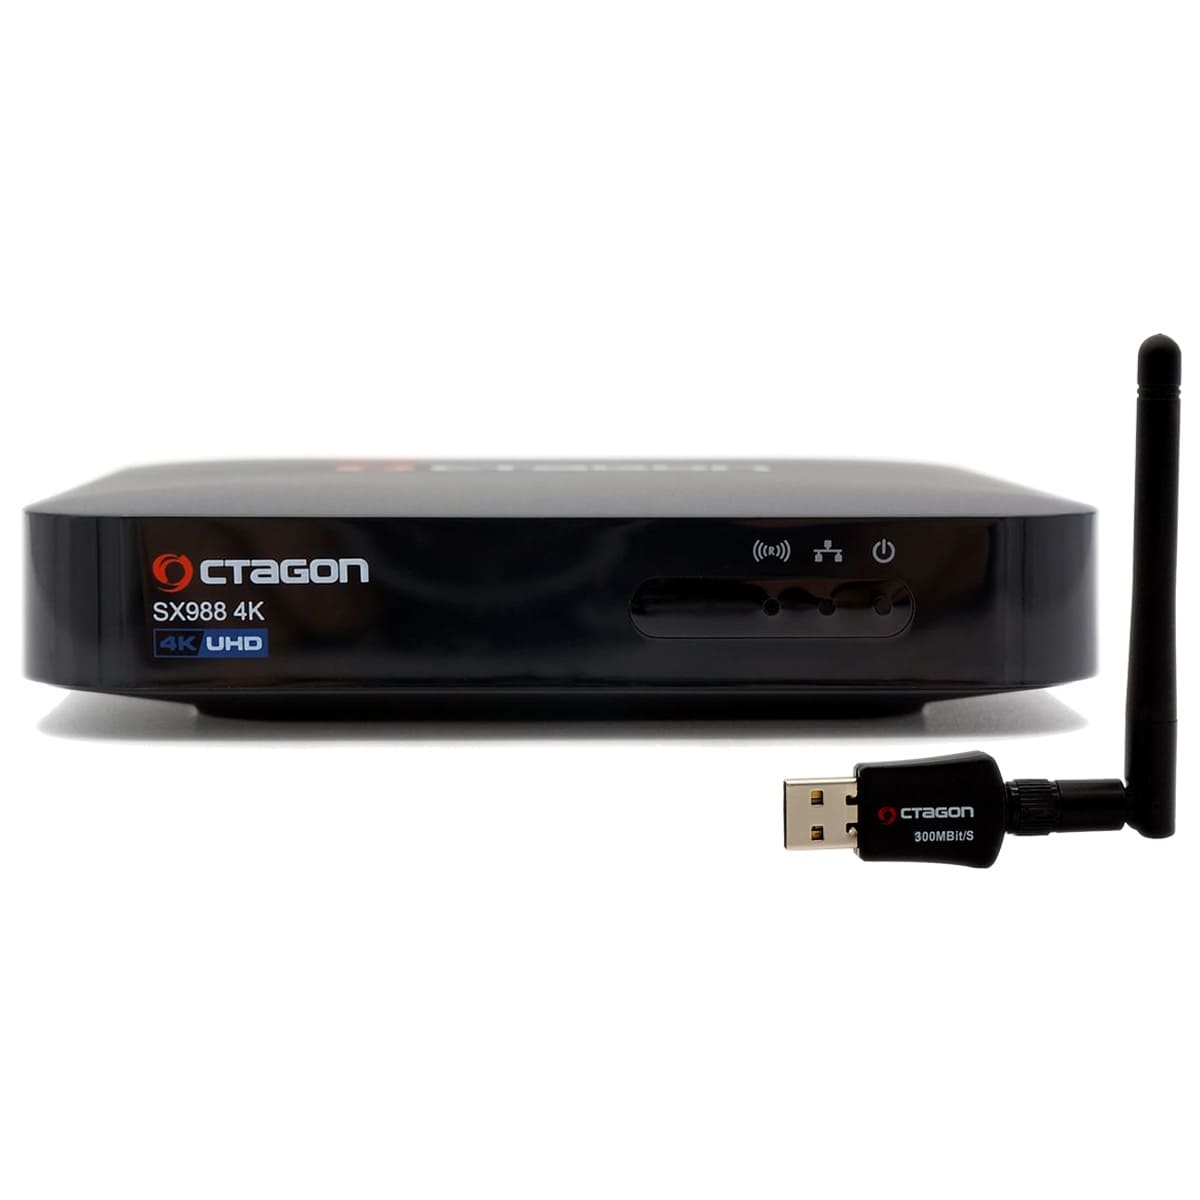 SX988 8 Mbit/s OCTAGON 300 GB IP Wifi